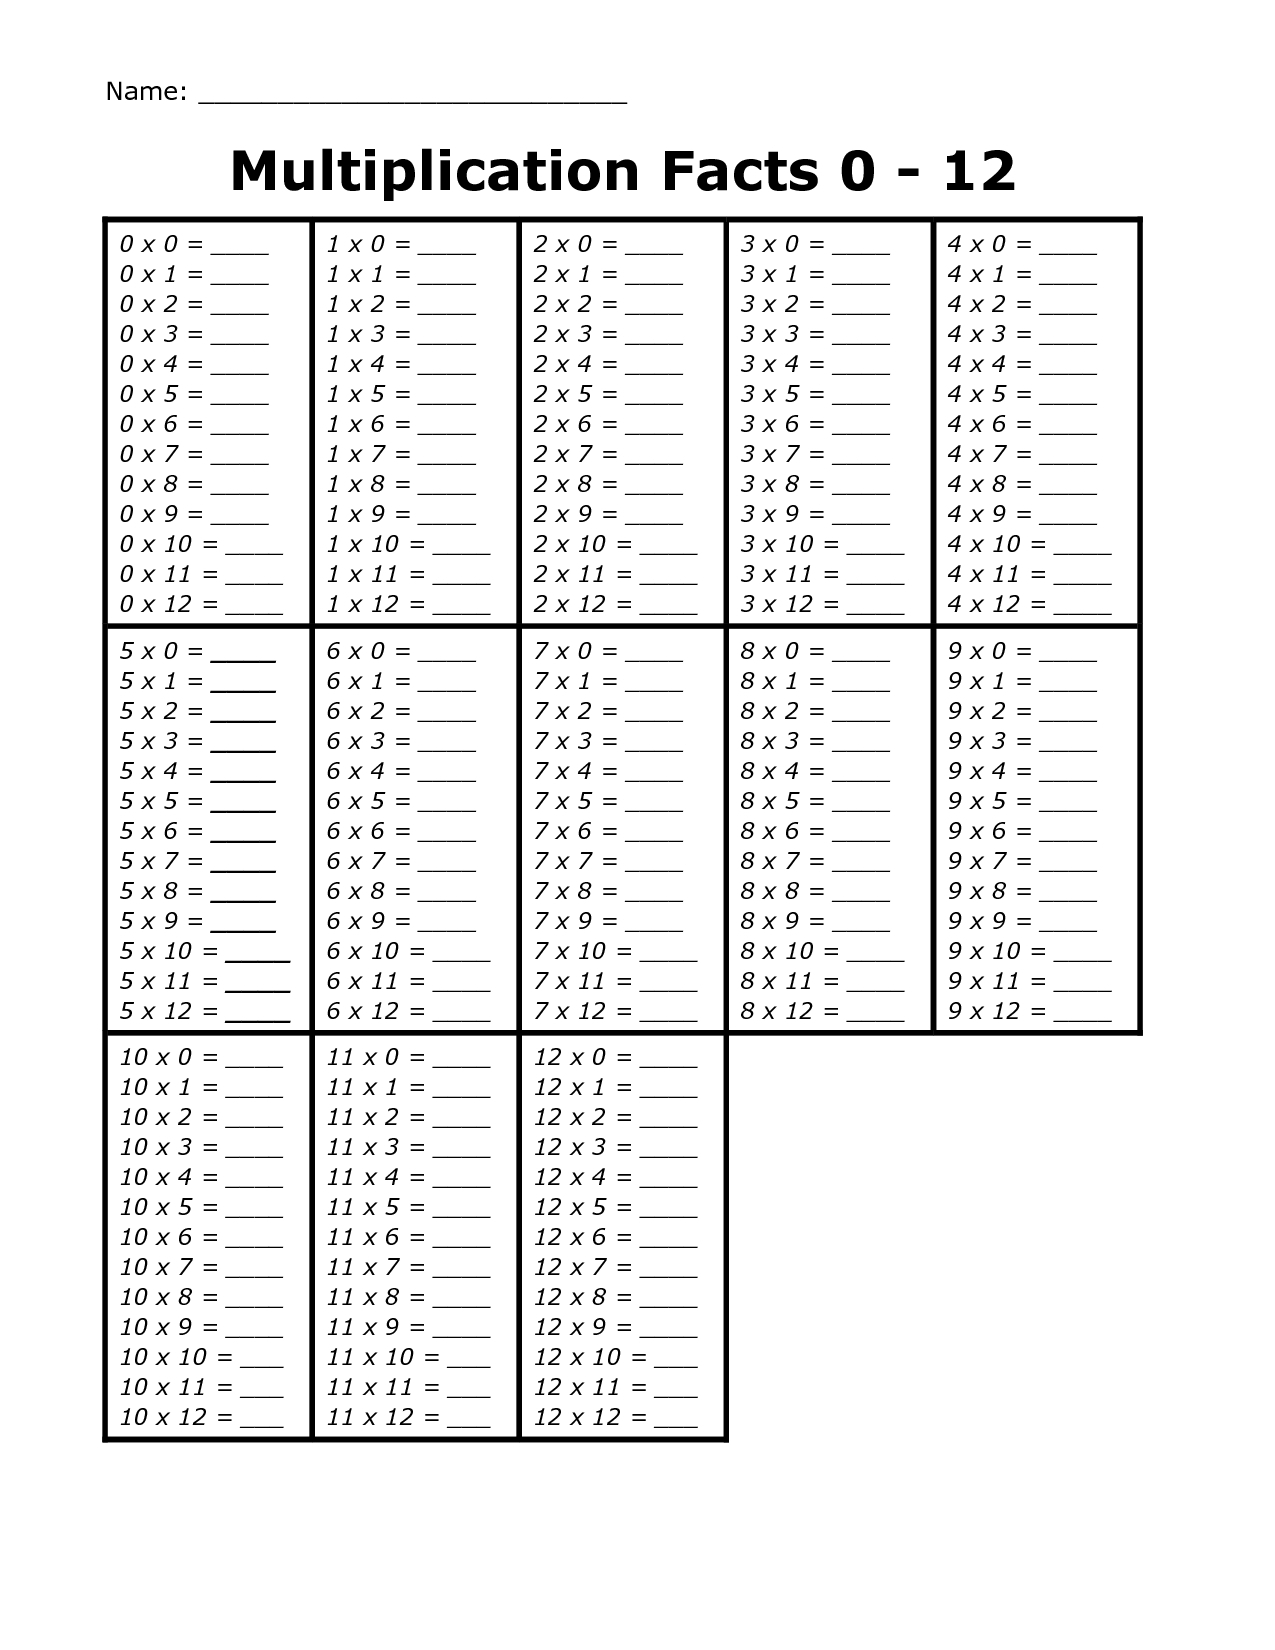 12x12 multiplication chart printable blank